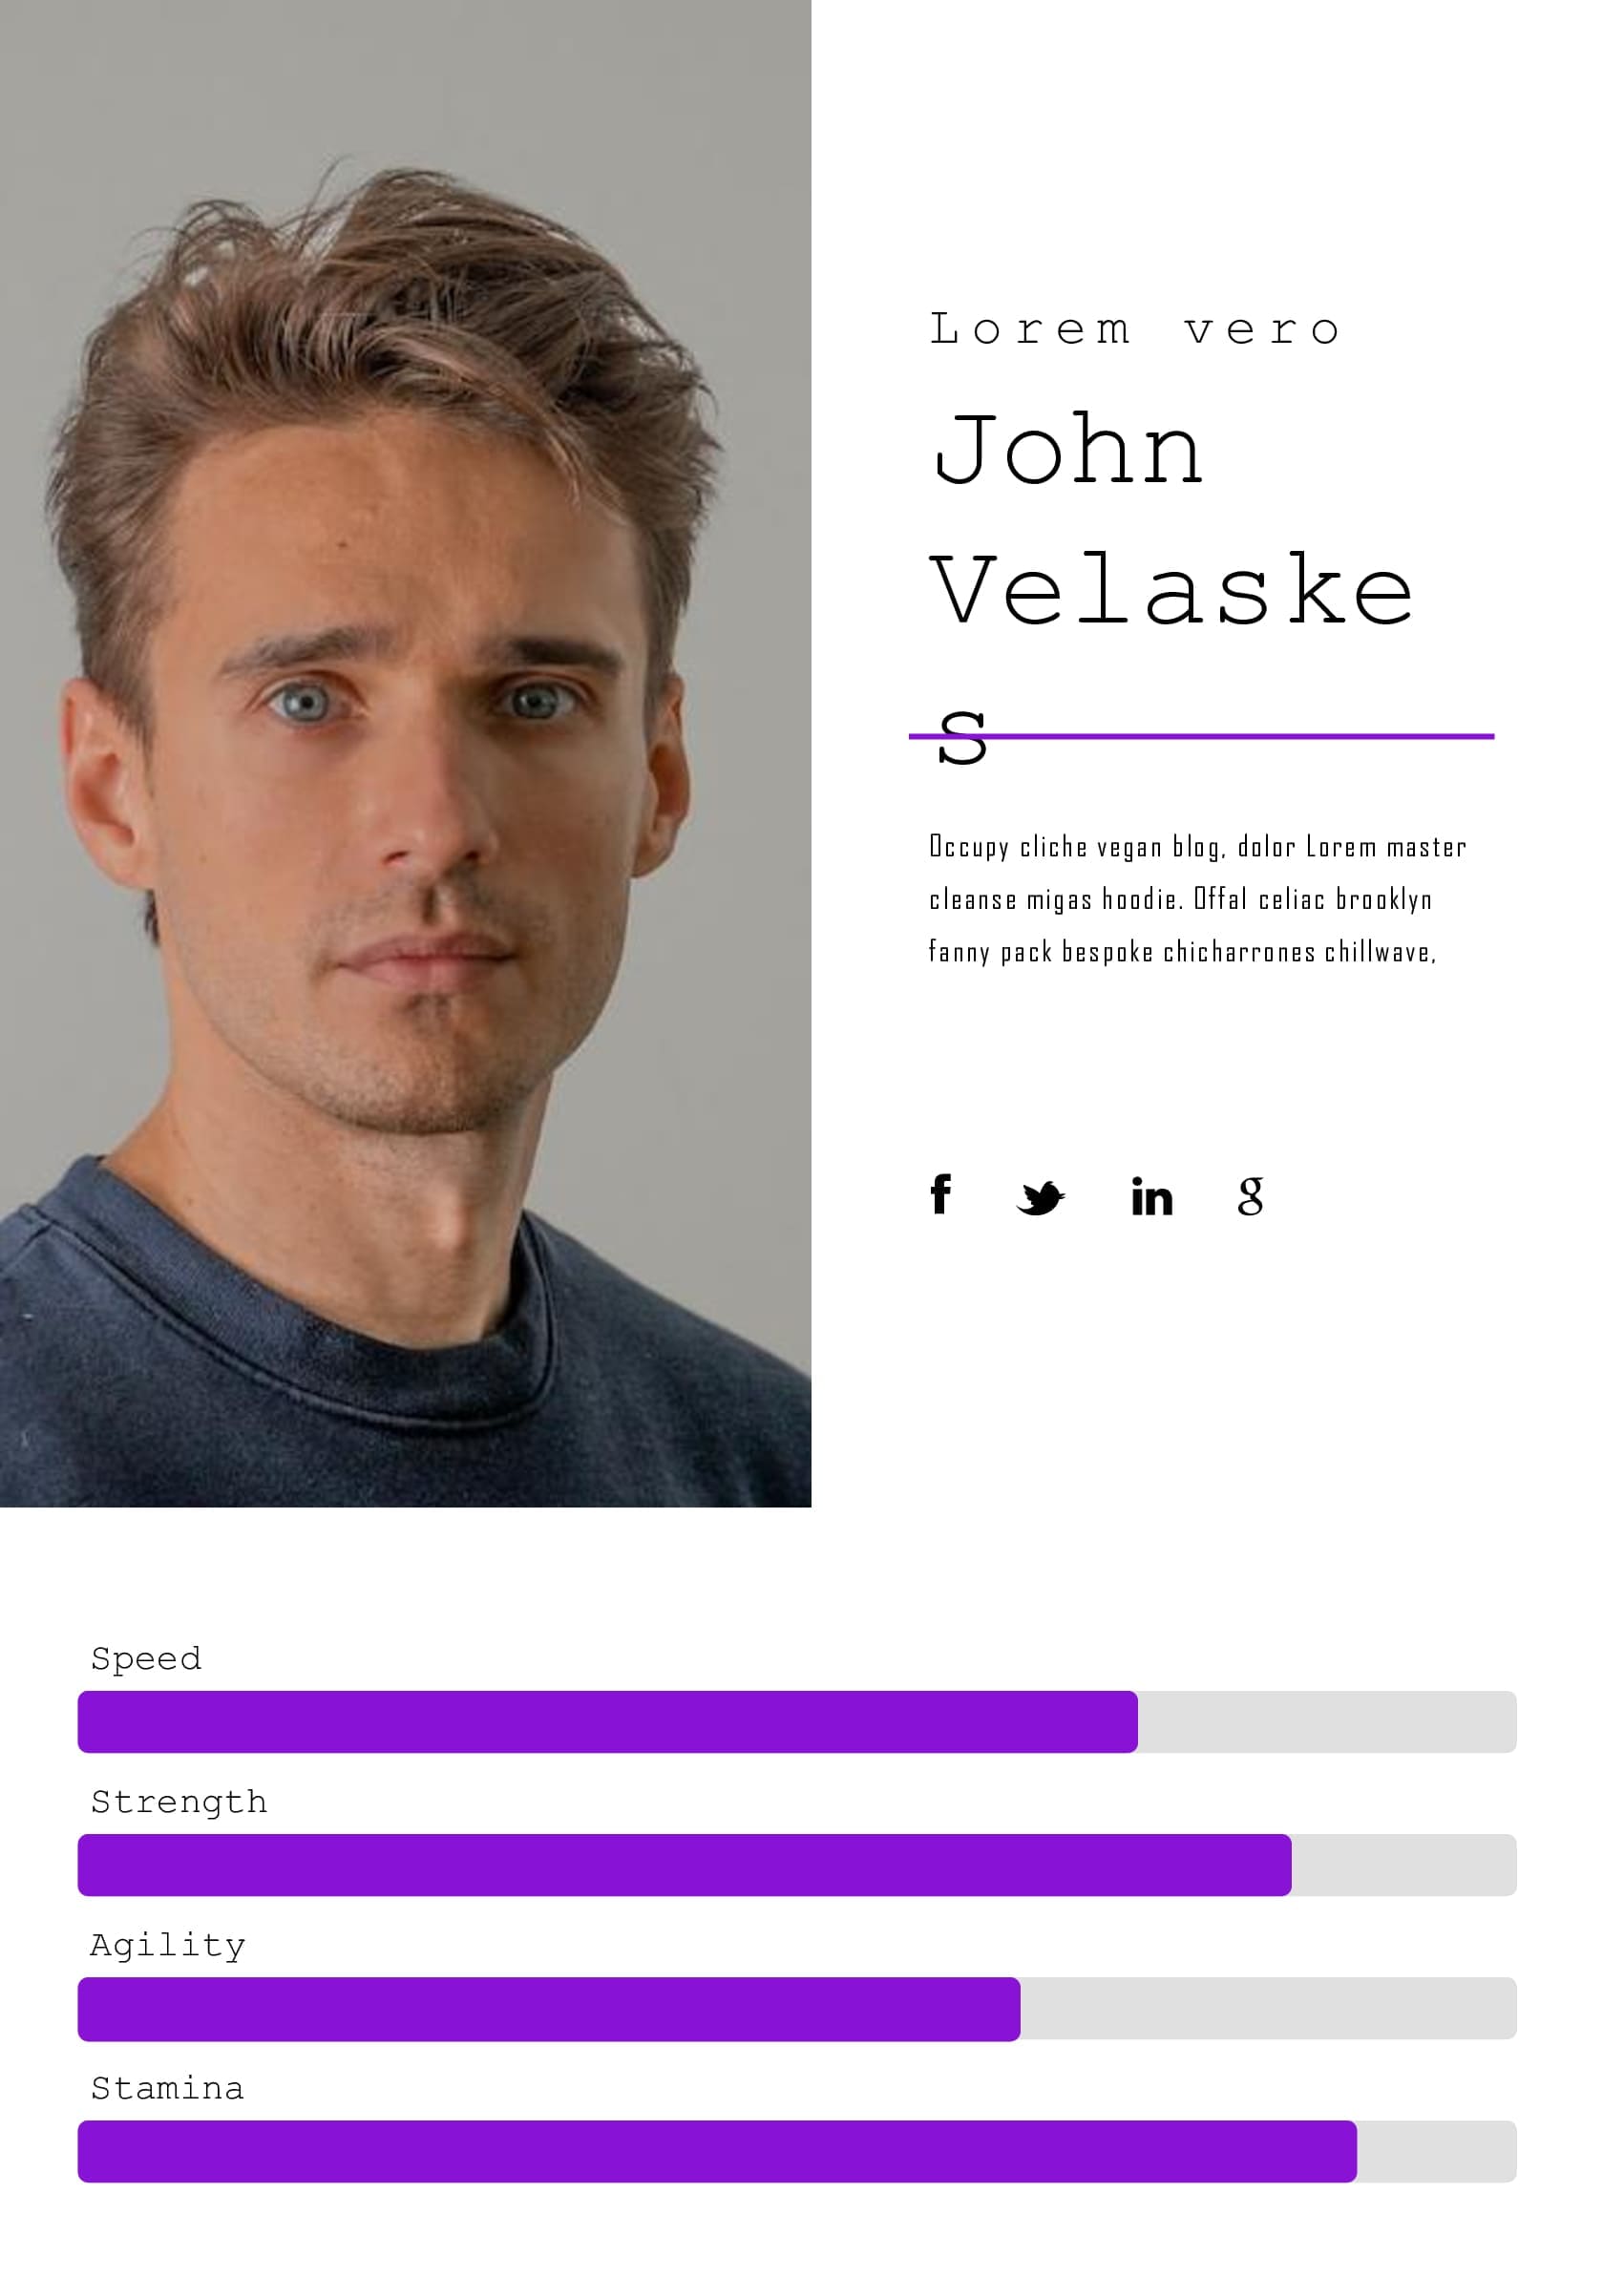 John Velaske has a high speed, strength, agility and stamina.